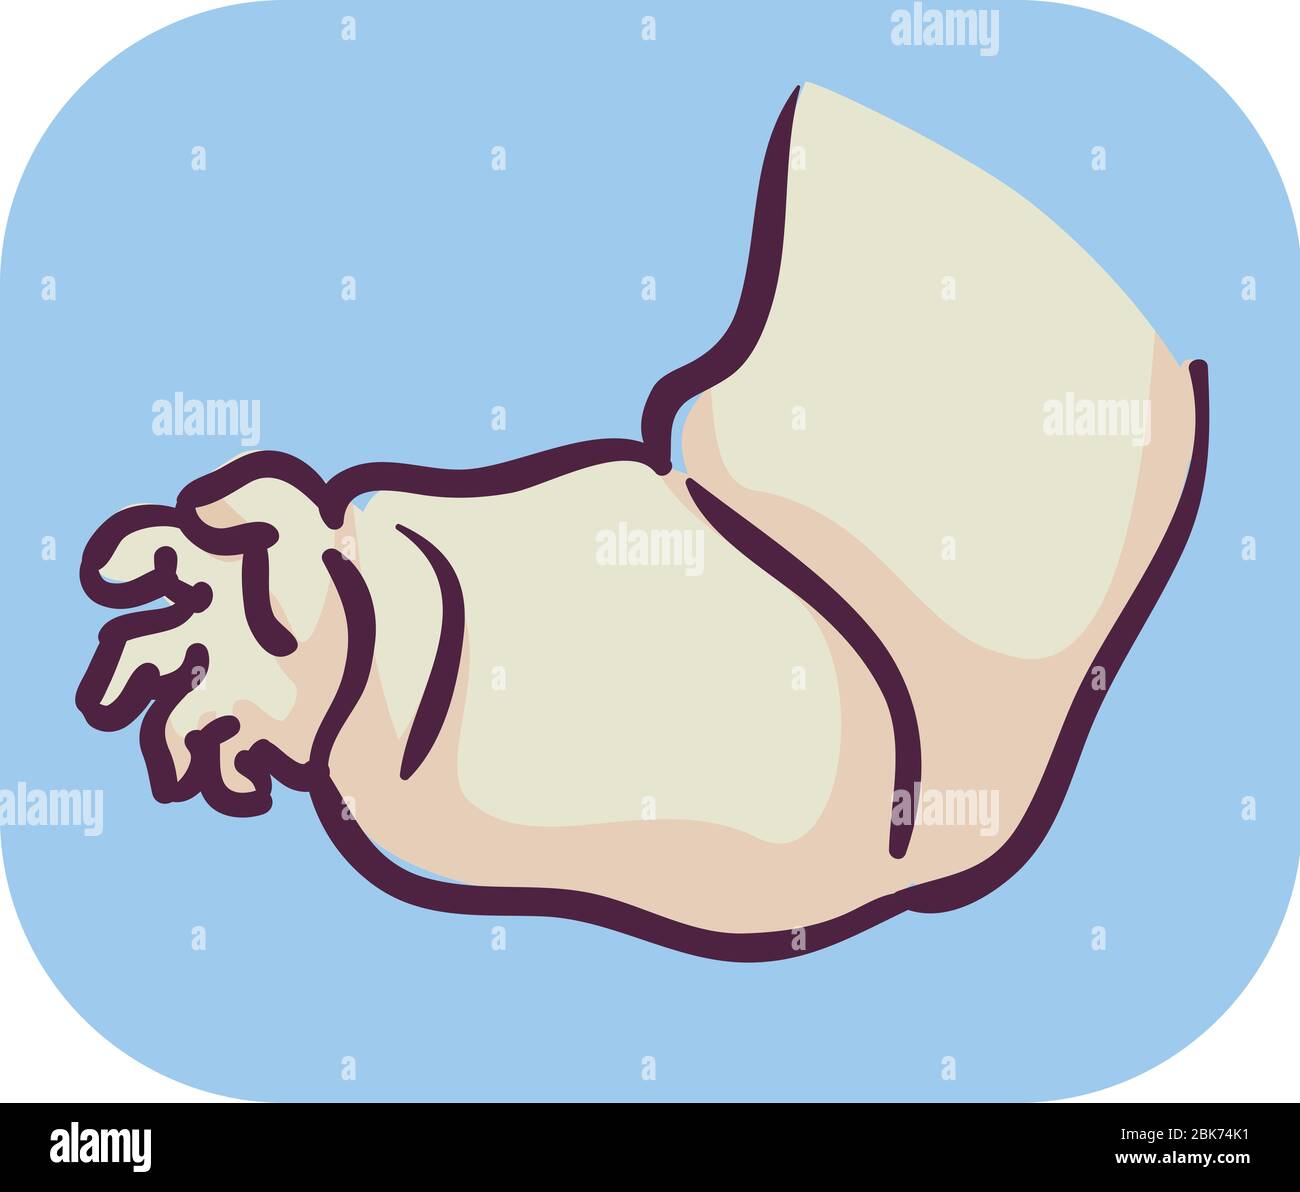 Illustration of Swollen Arm Symptom of Edema Stock Photo